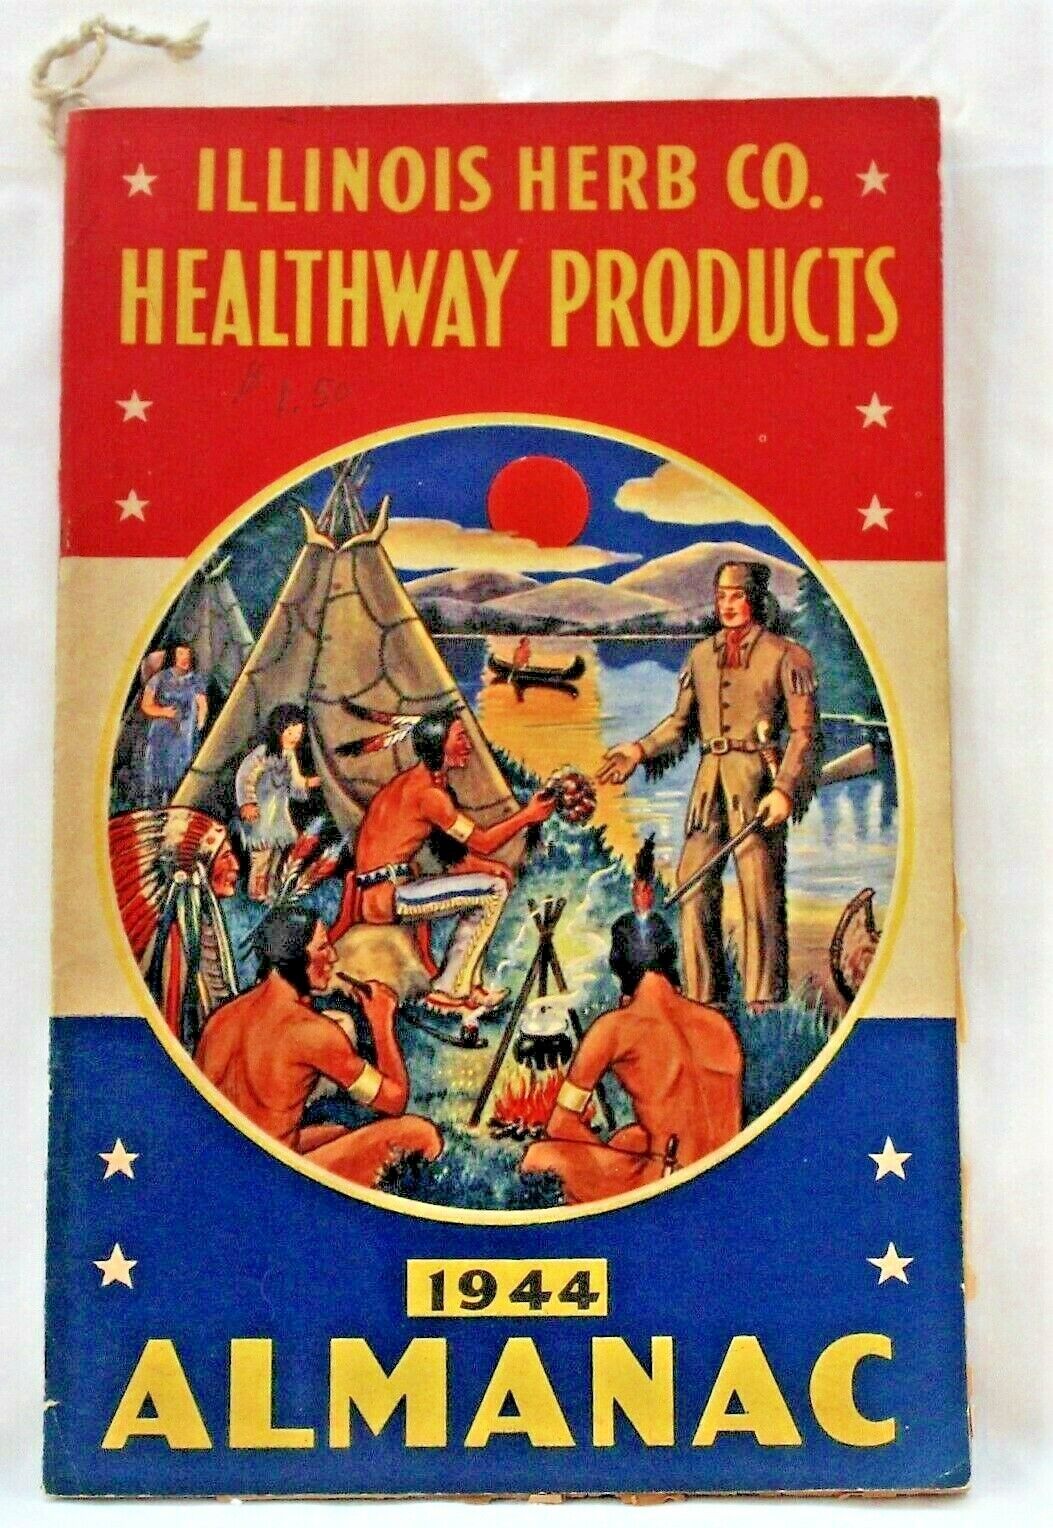 Illinois Herb Co Almanac Rare Vintage Chicago Healthway Products 1944 